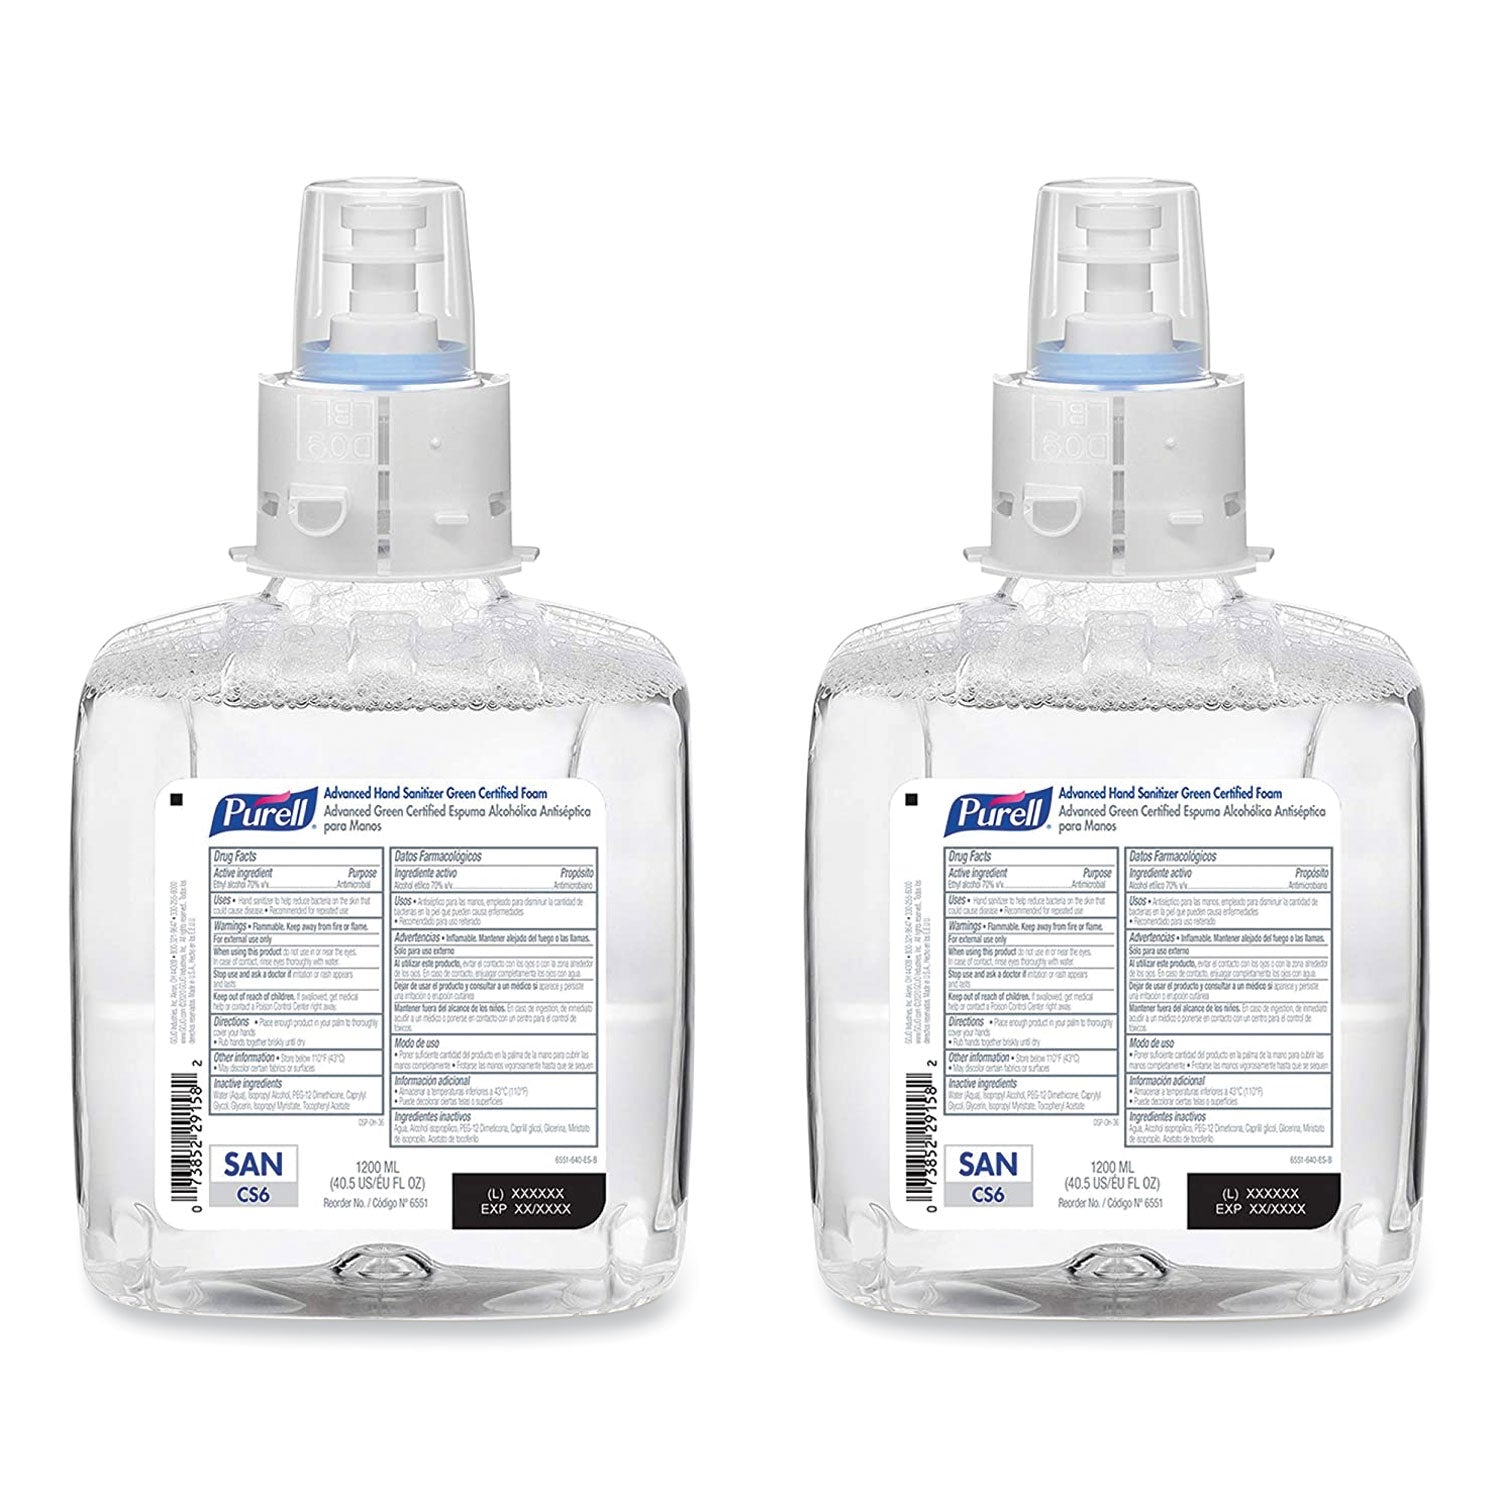 advanced-hand-sanitizer-green-certified-foam-refill-for-cs6-dispensers-1200-ml-fragrance-free-2-carton_goj655102ct - 1